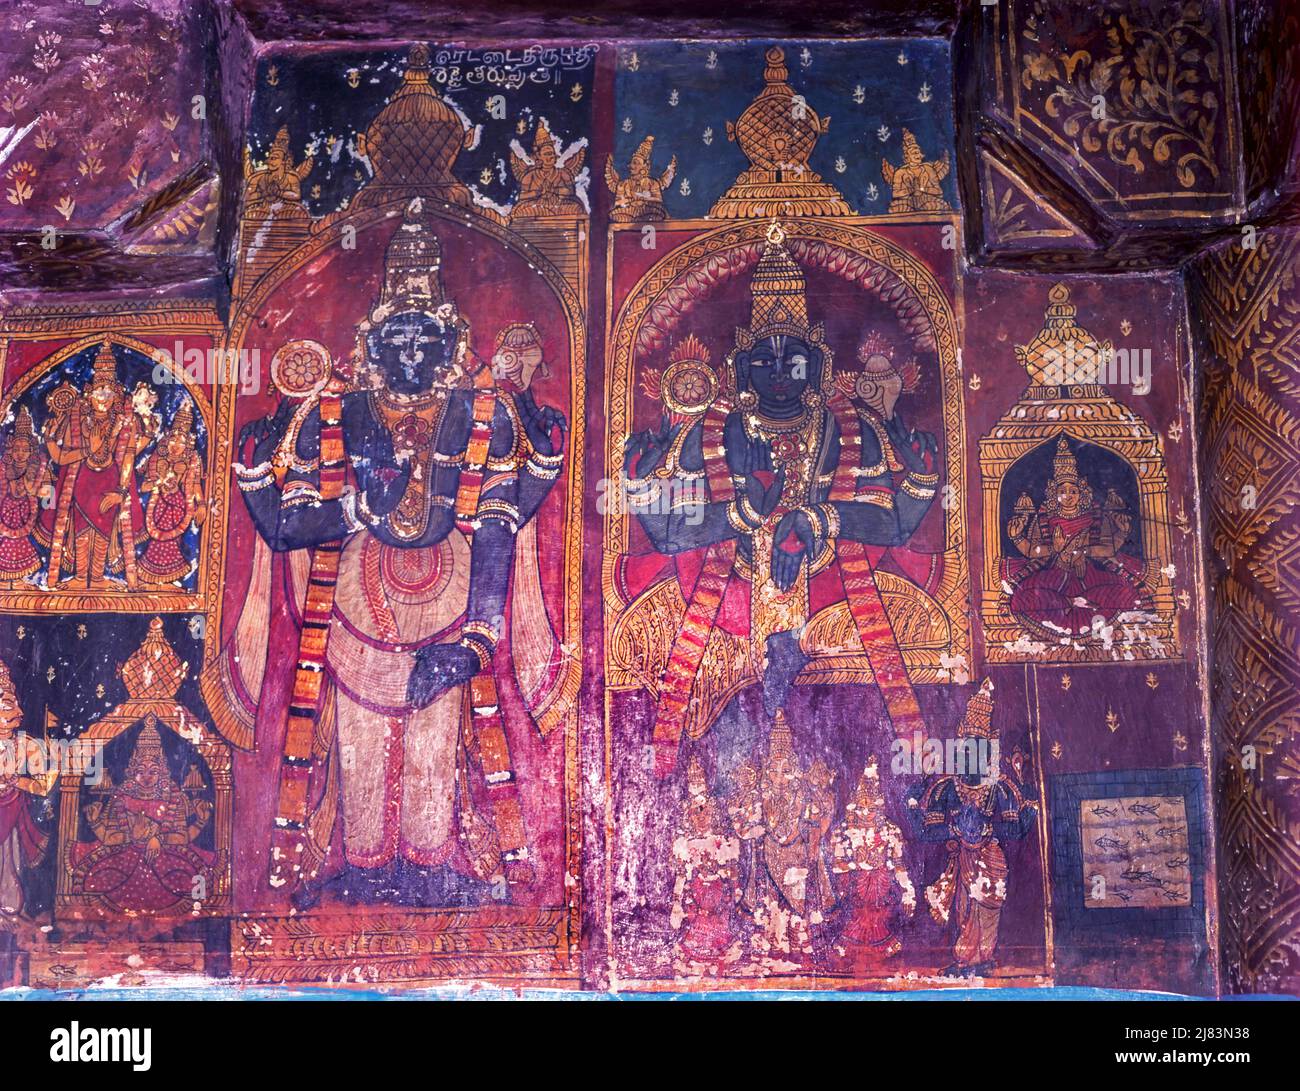 Wandmalereien in Varadaraja Perumal Tempelmauer in Kancheepuram Tamil Nadu, Indien, Asien Stockfoto